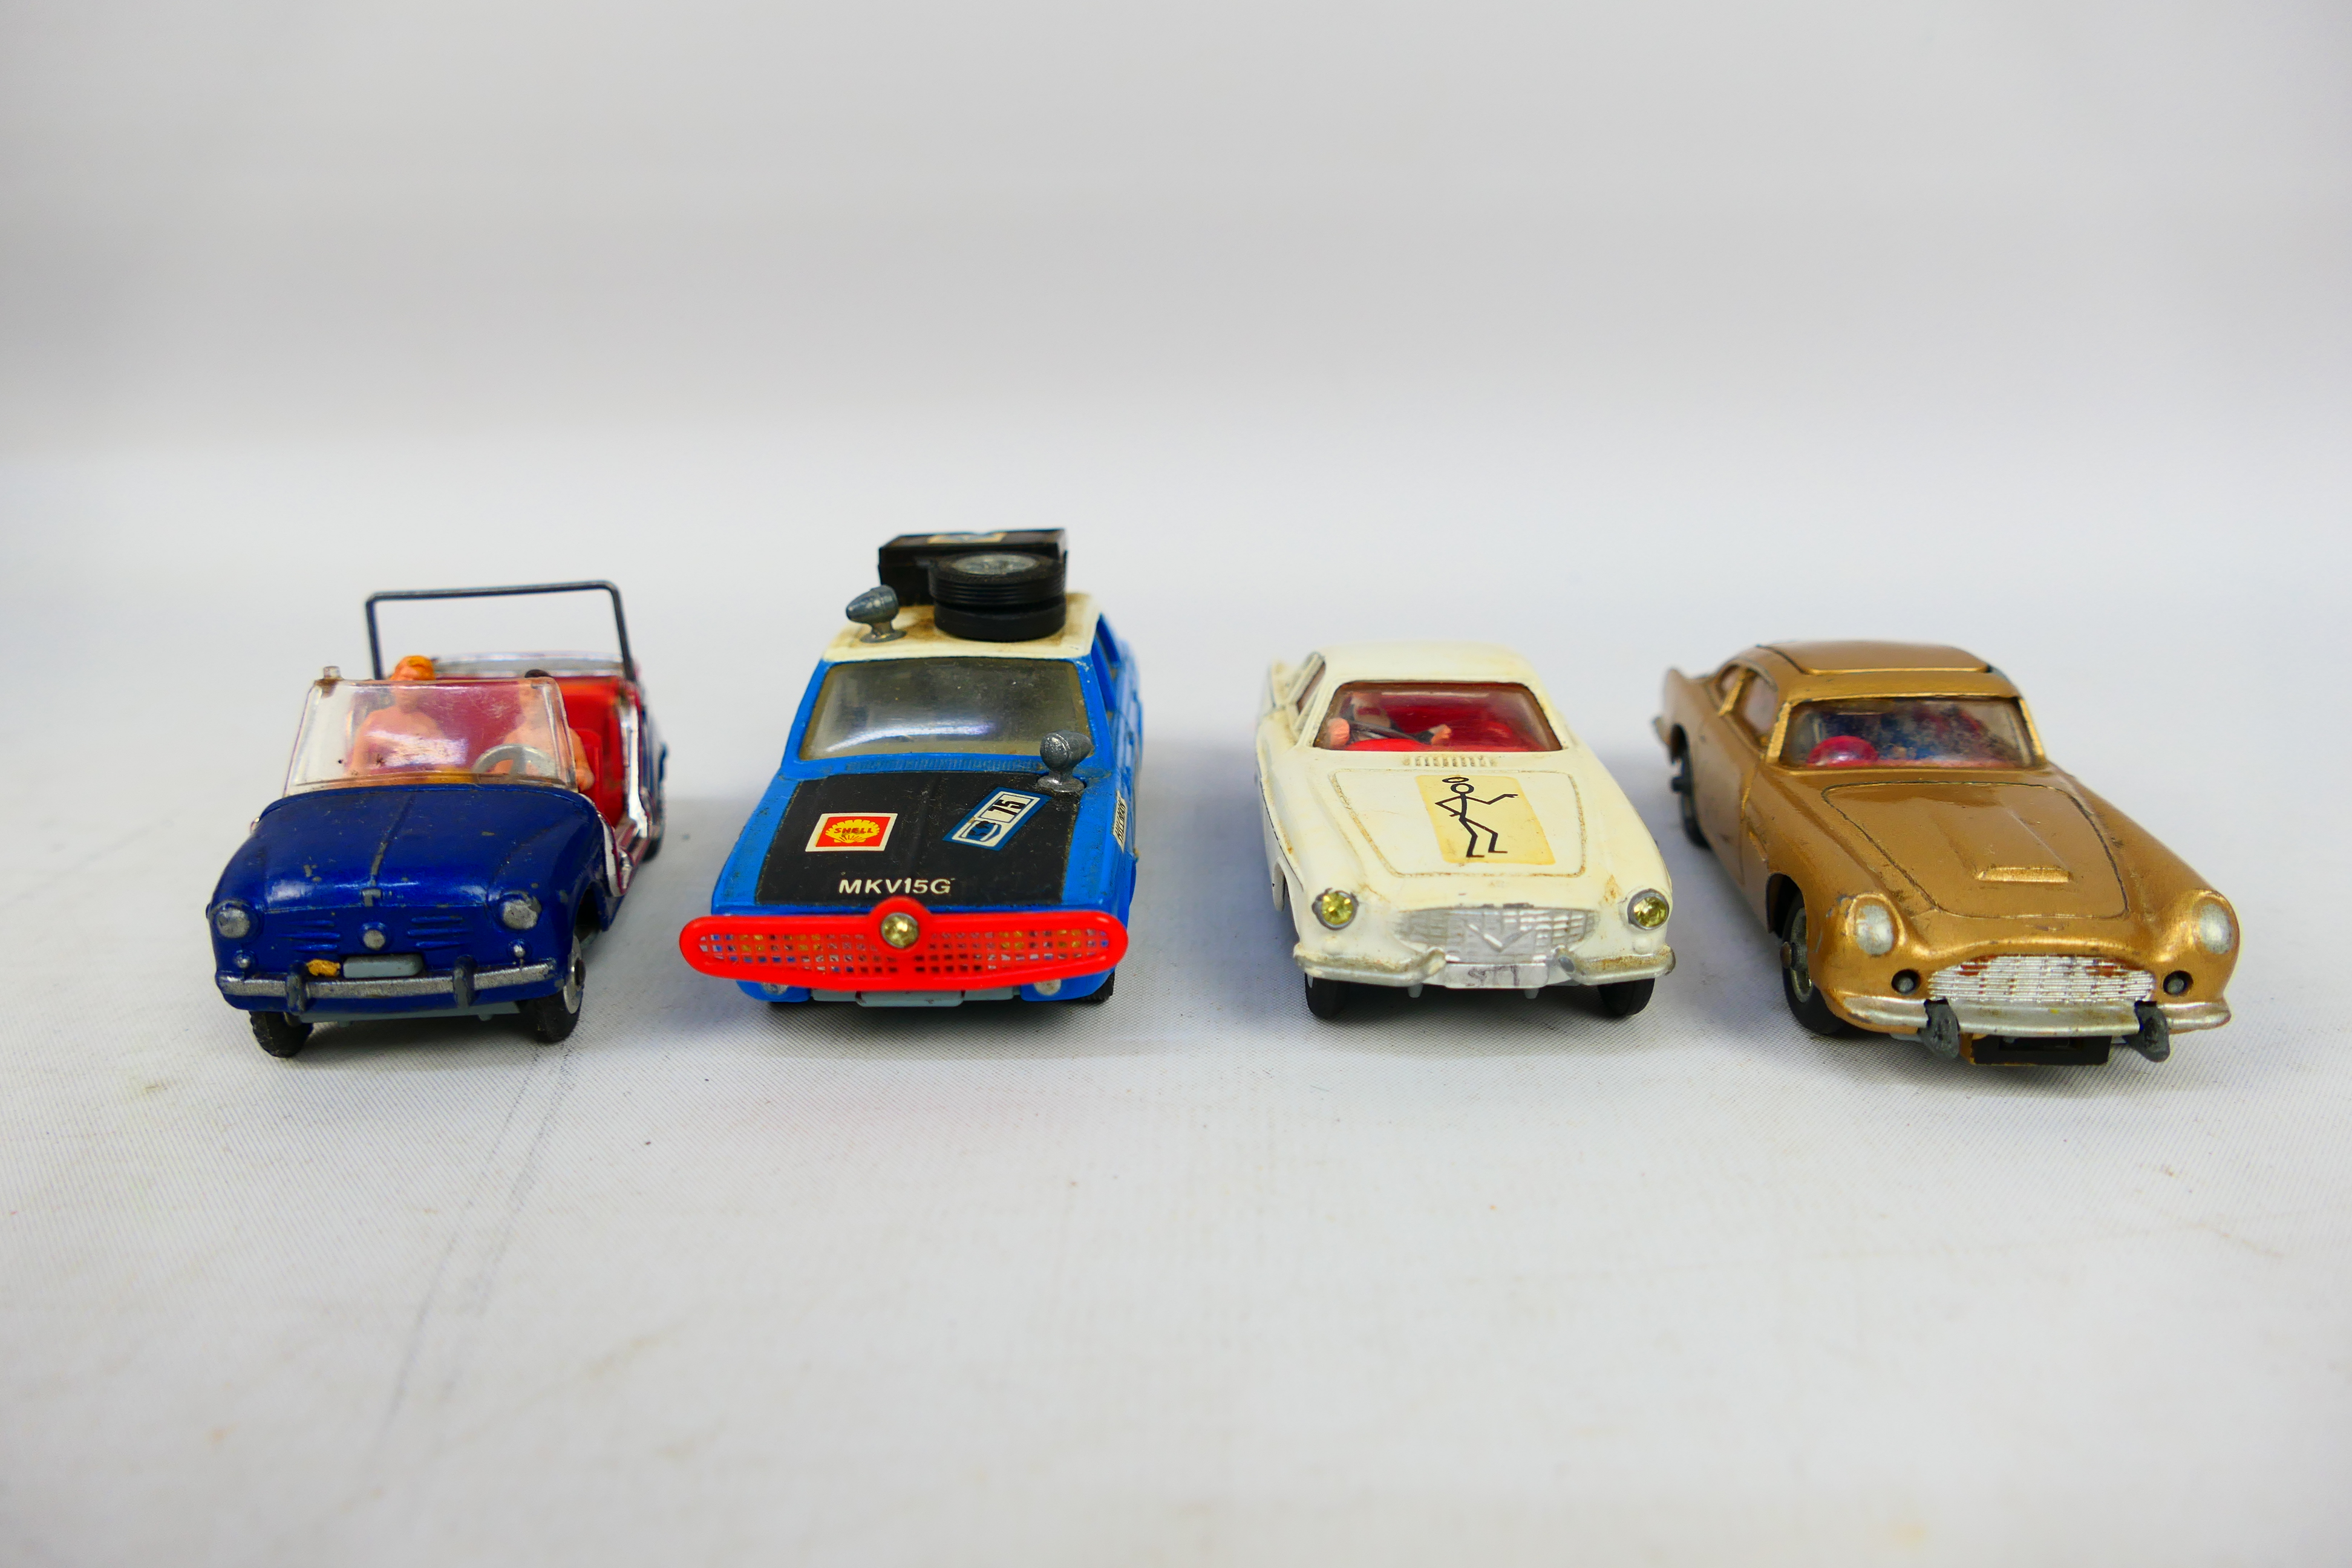 Corgi Toys - Four unboxed diecast model cars from Corgi Toys. - Image 6 of 6